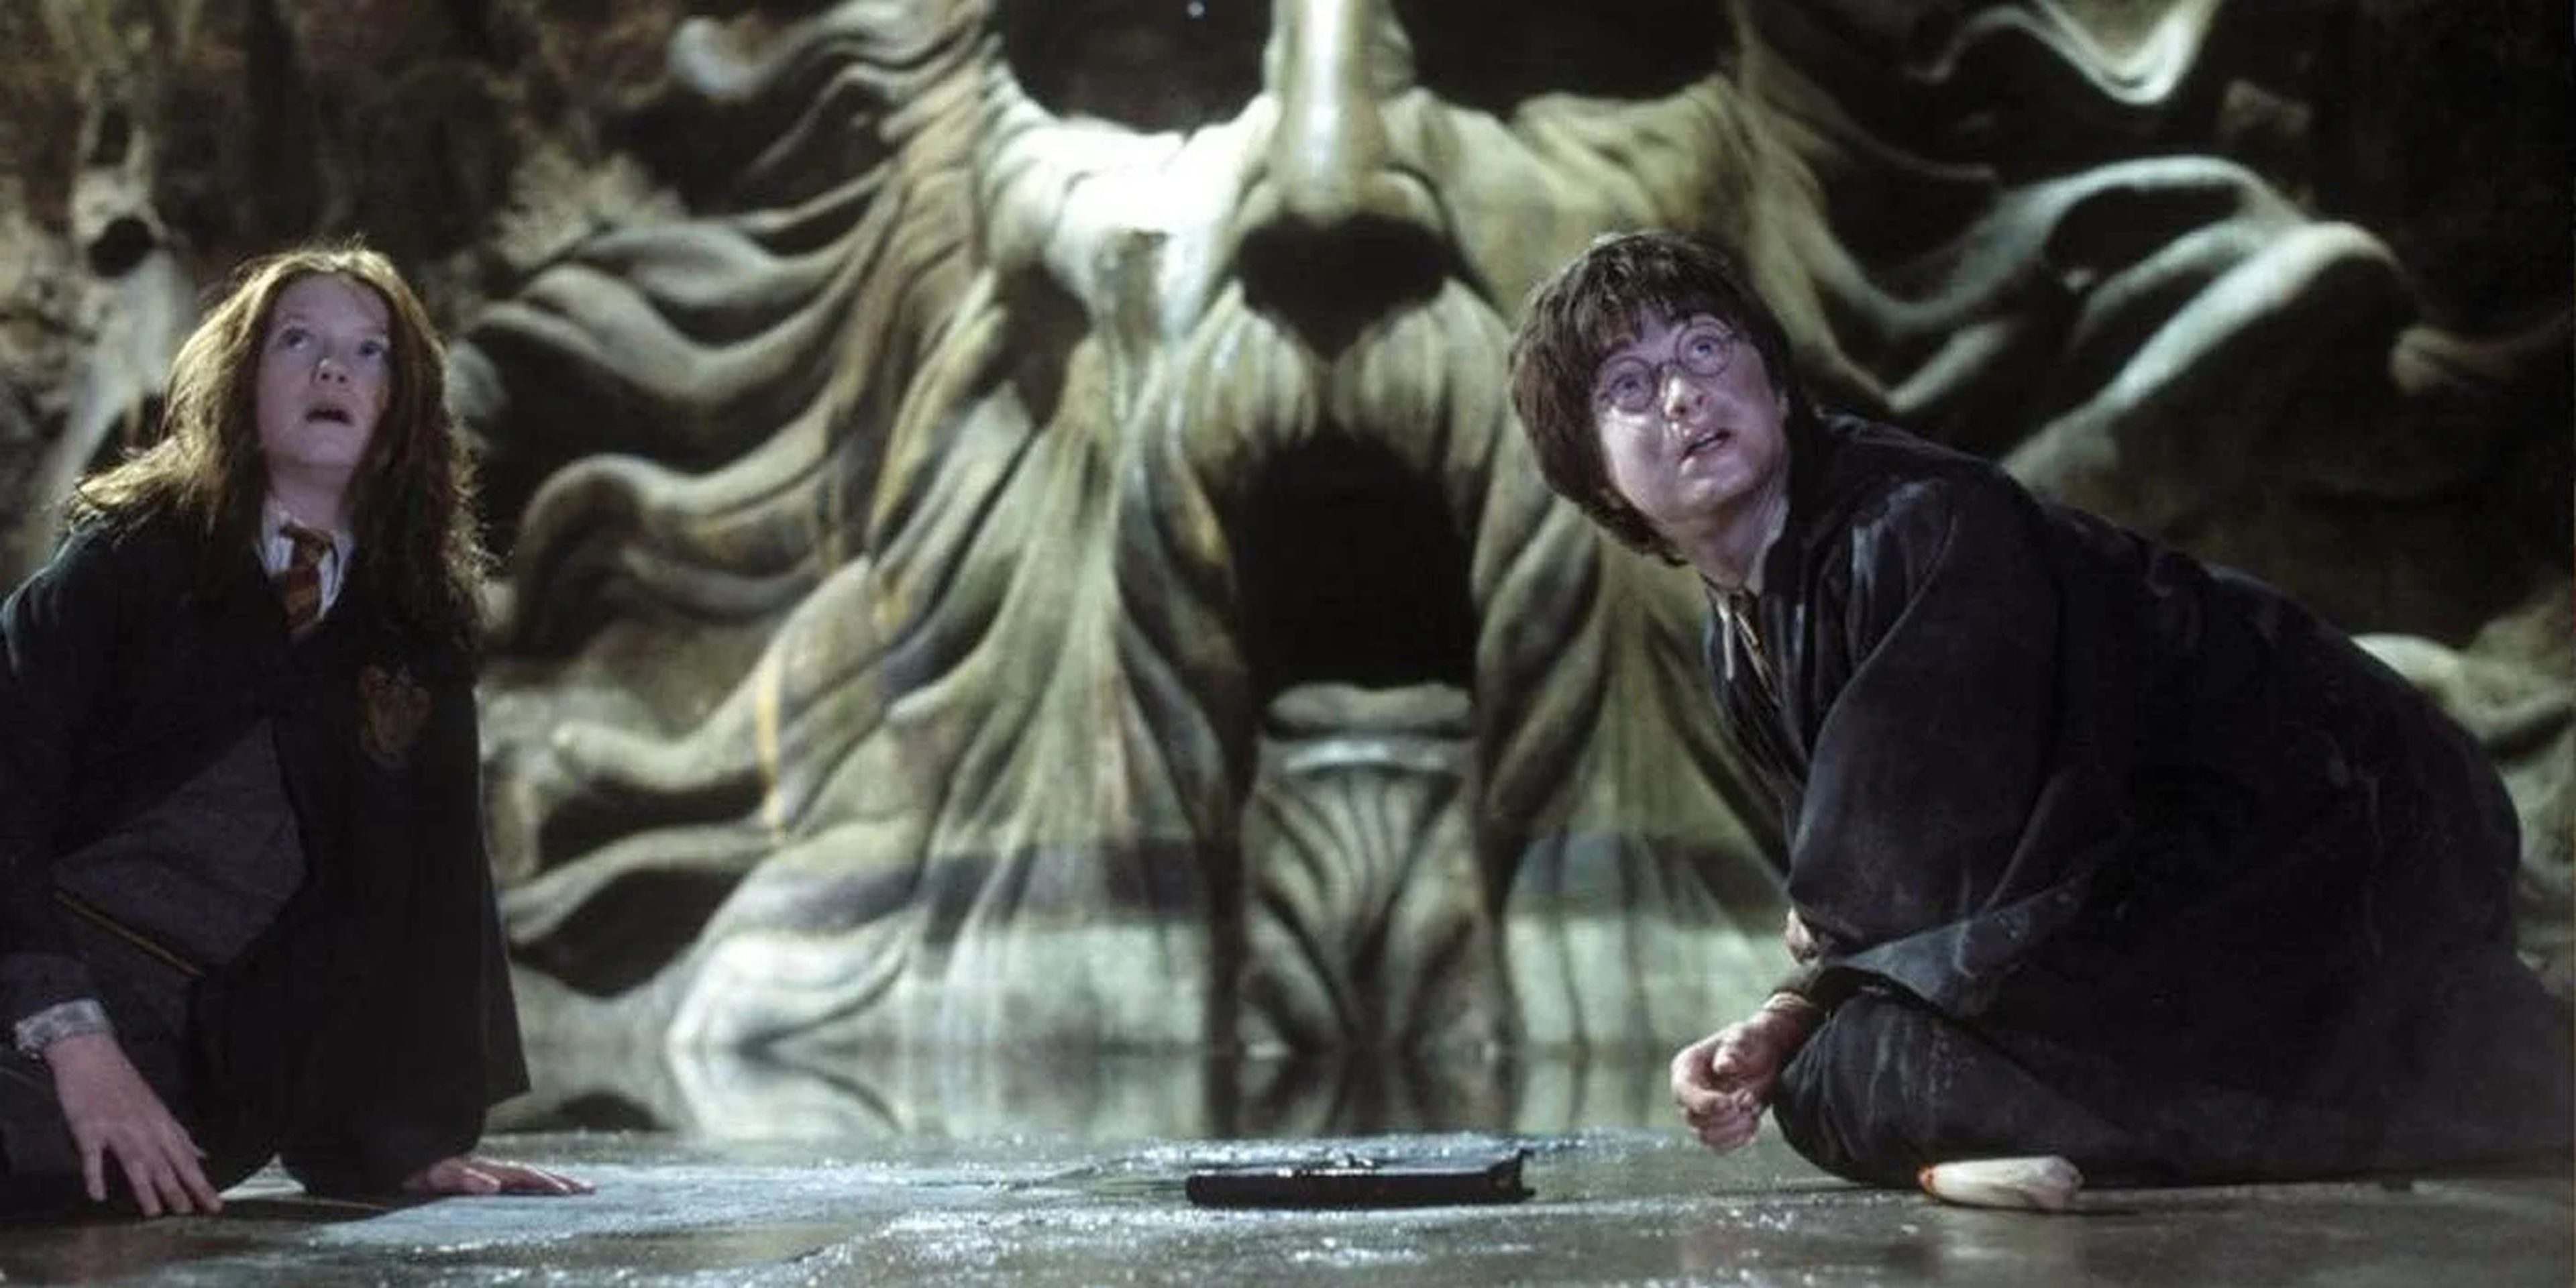 Harry Potter y la cámara secreta (2002)